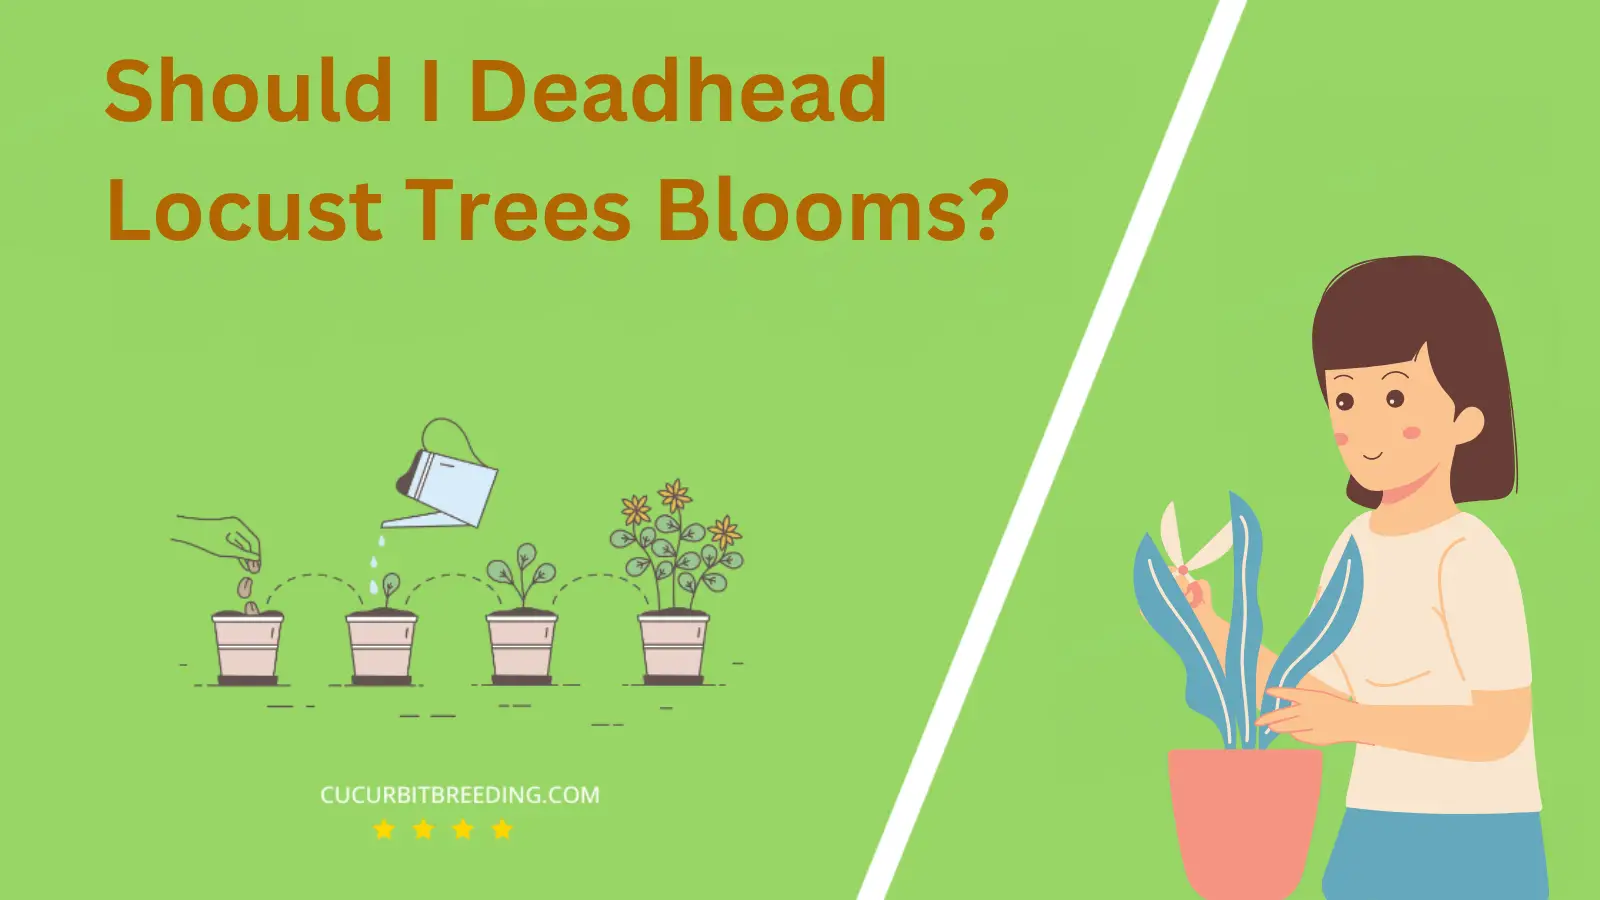 Should I Deadhead Locust Trees Blooms?